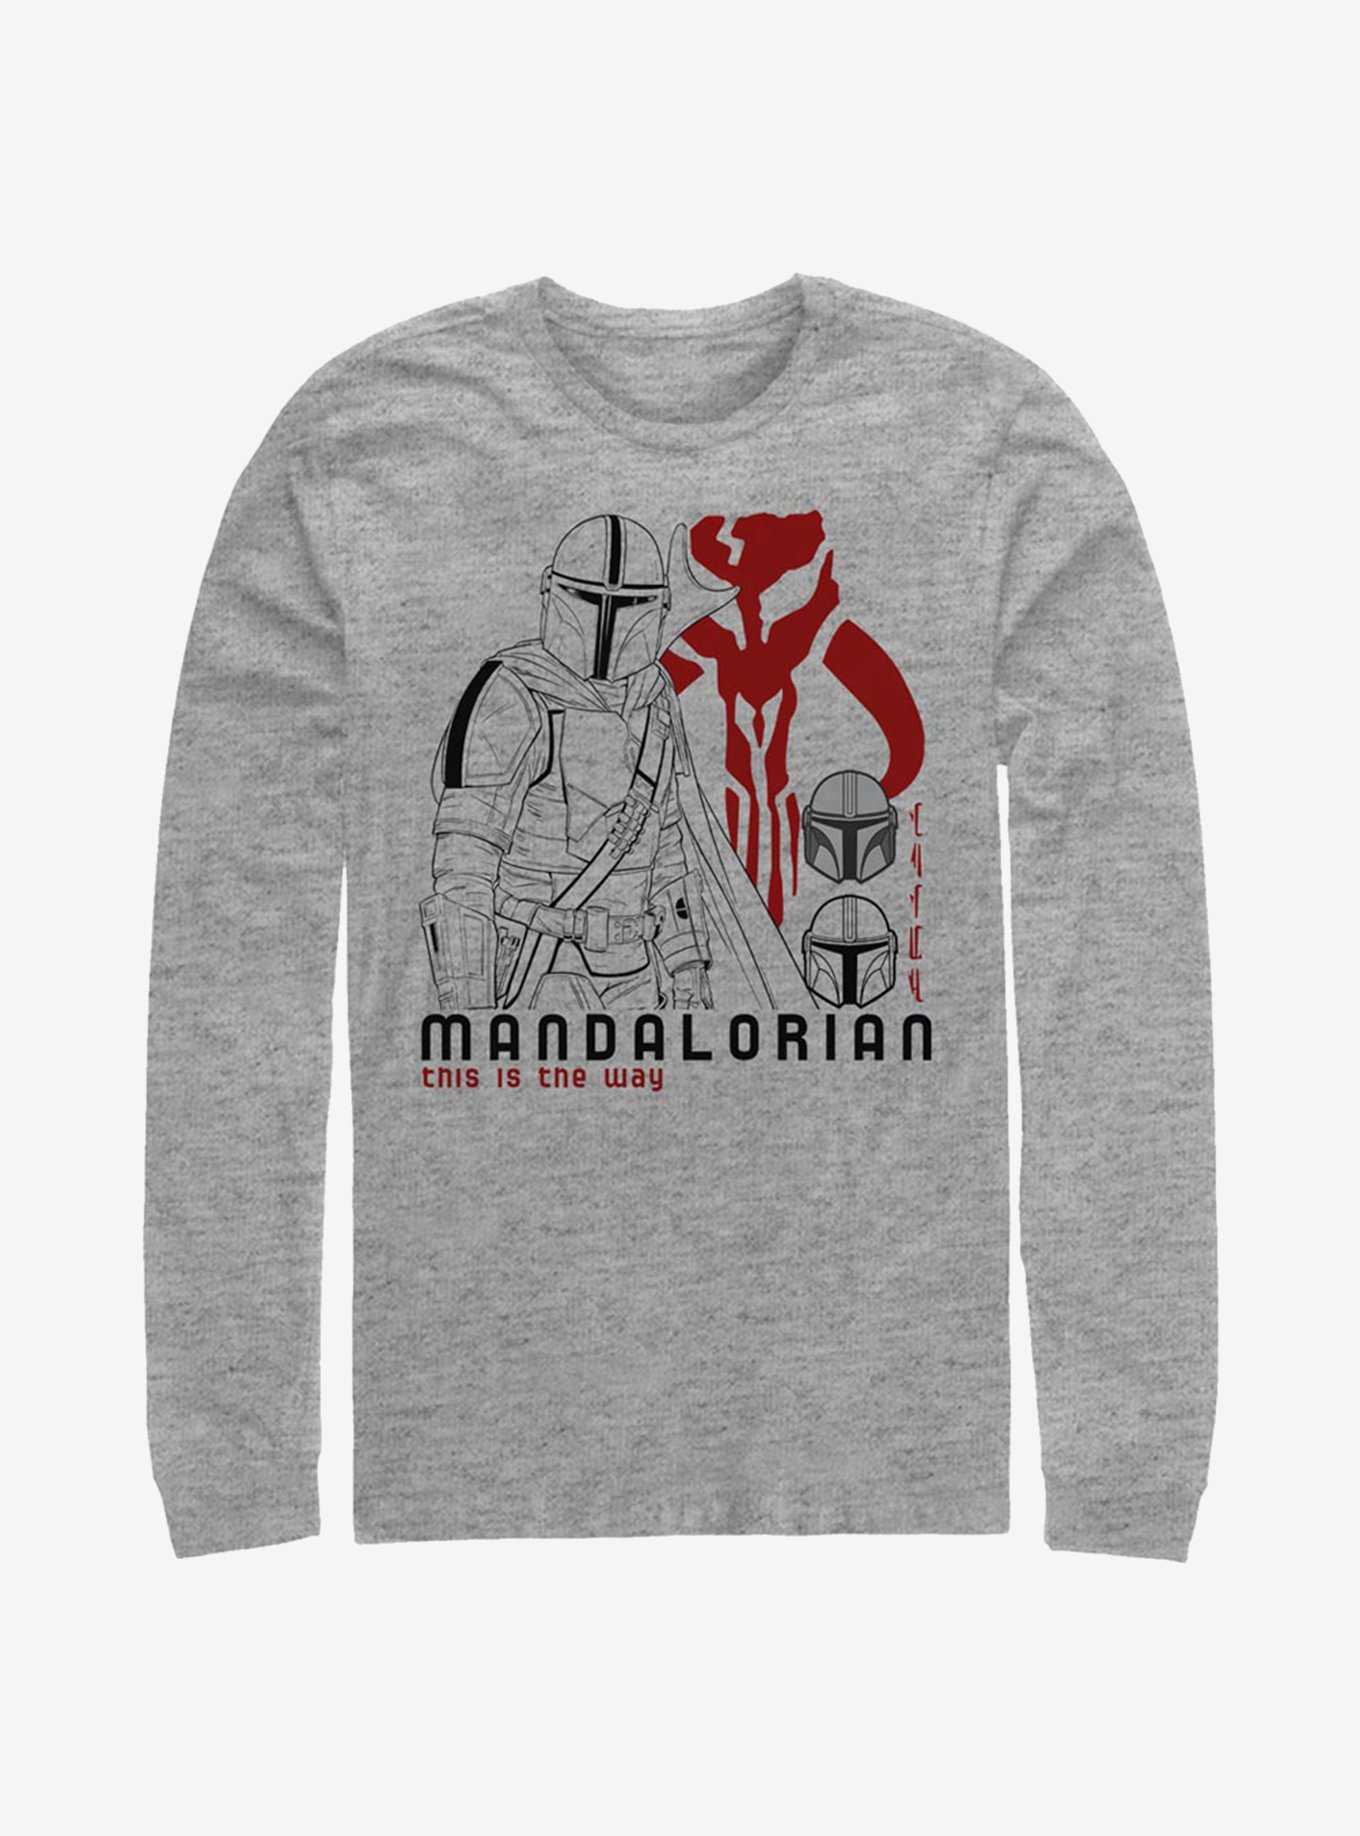 Star Wars The Mandalorian The Mando Way Long-Sleeve T-Shirt, , hi-res